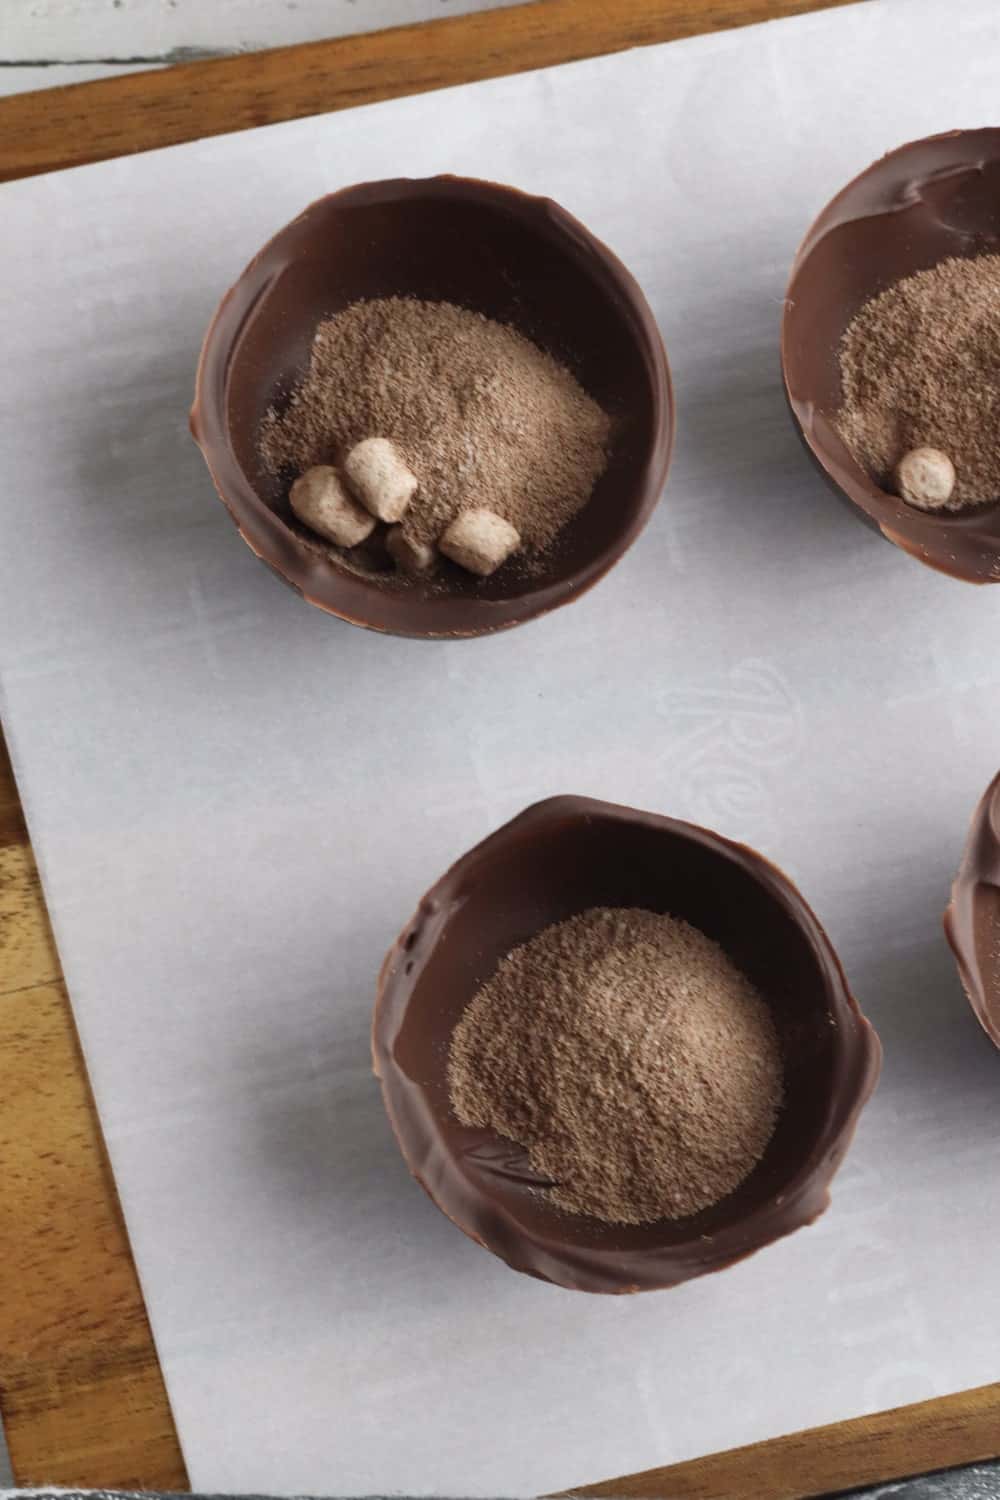 cocoa powder into the chocolate shell